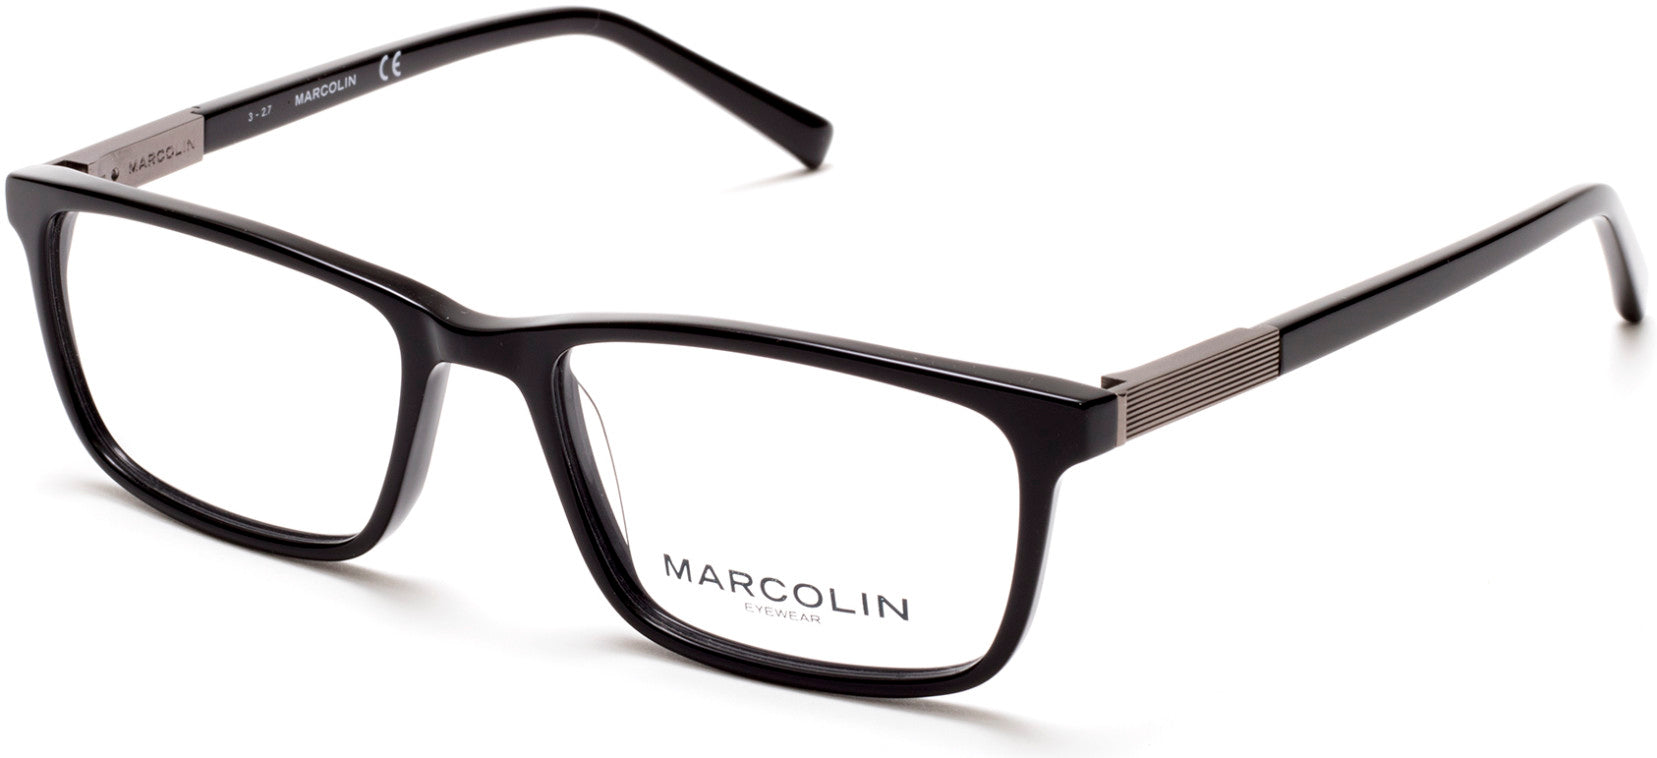 Marcolin MA3014 Geometric Eyeglasses 001-001 - Shiny Black